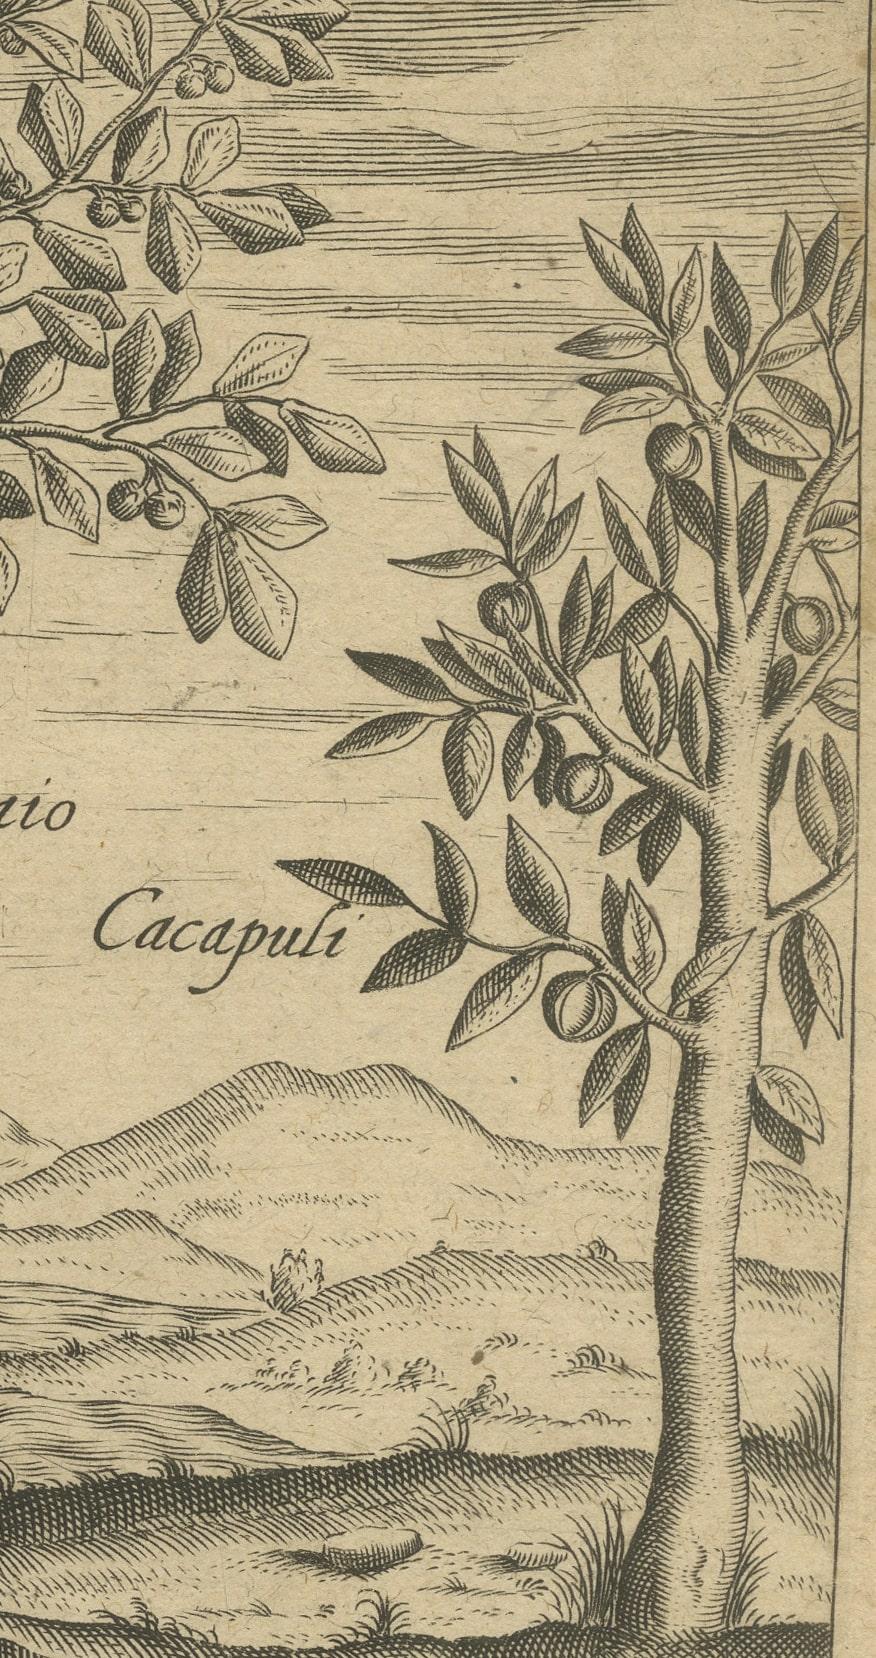 Paper Spices of the Tropics: Cinnamon and Cassia in De Bry's 1601 Illustration For Sale